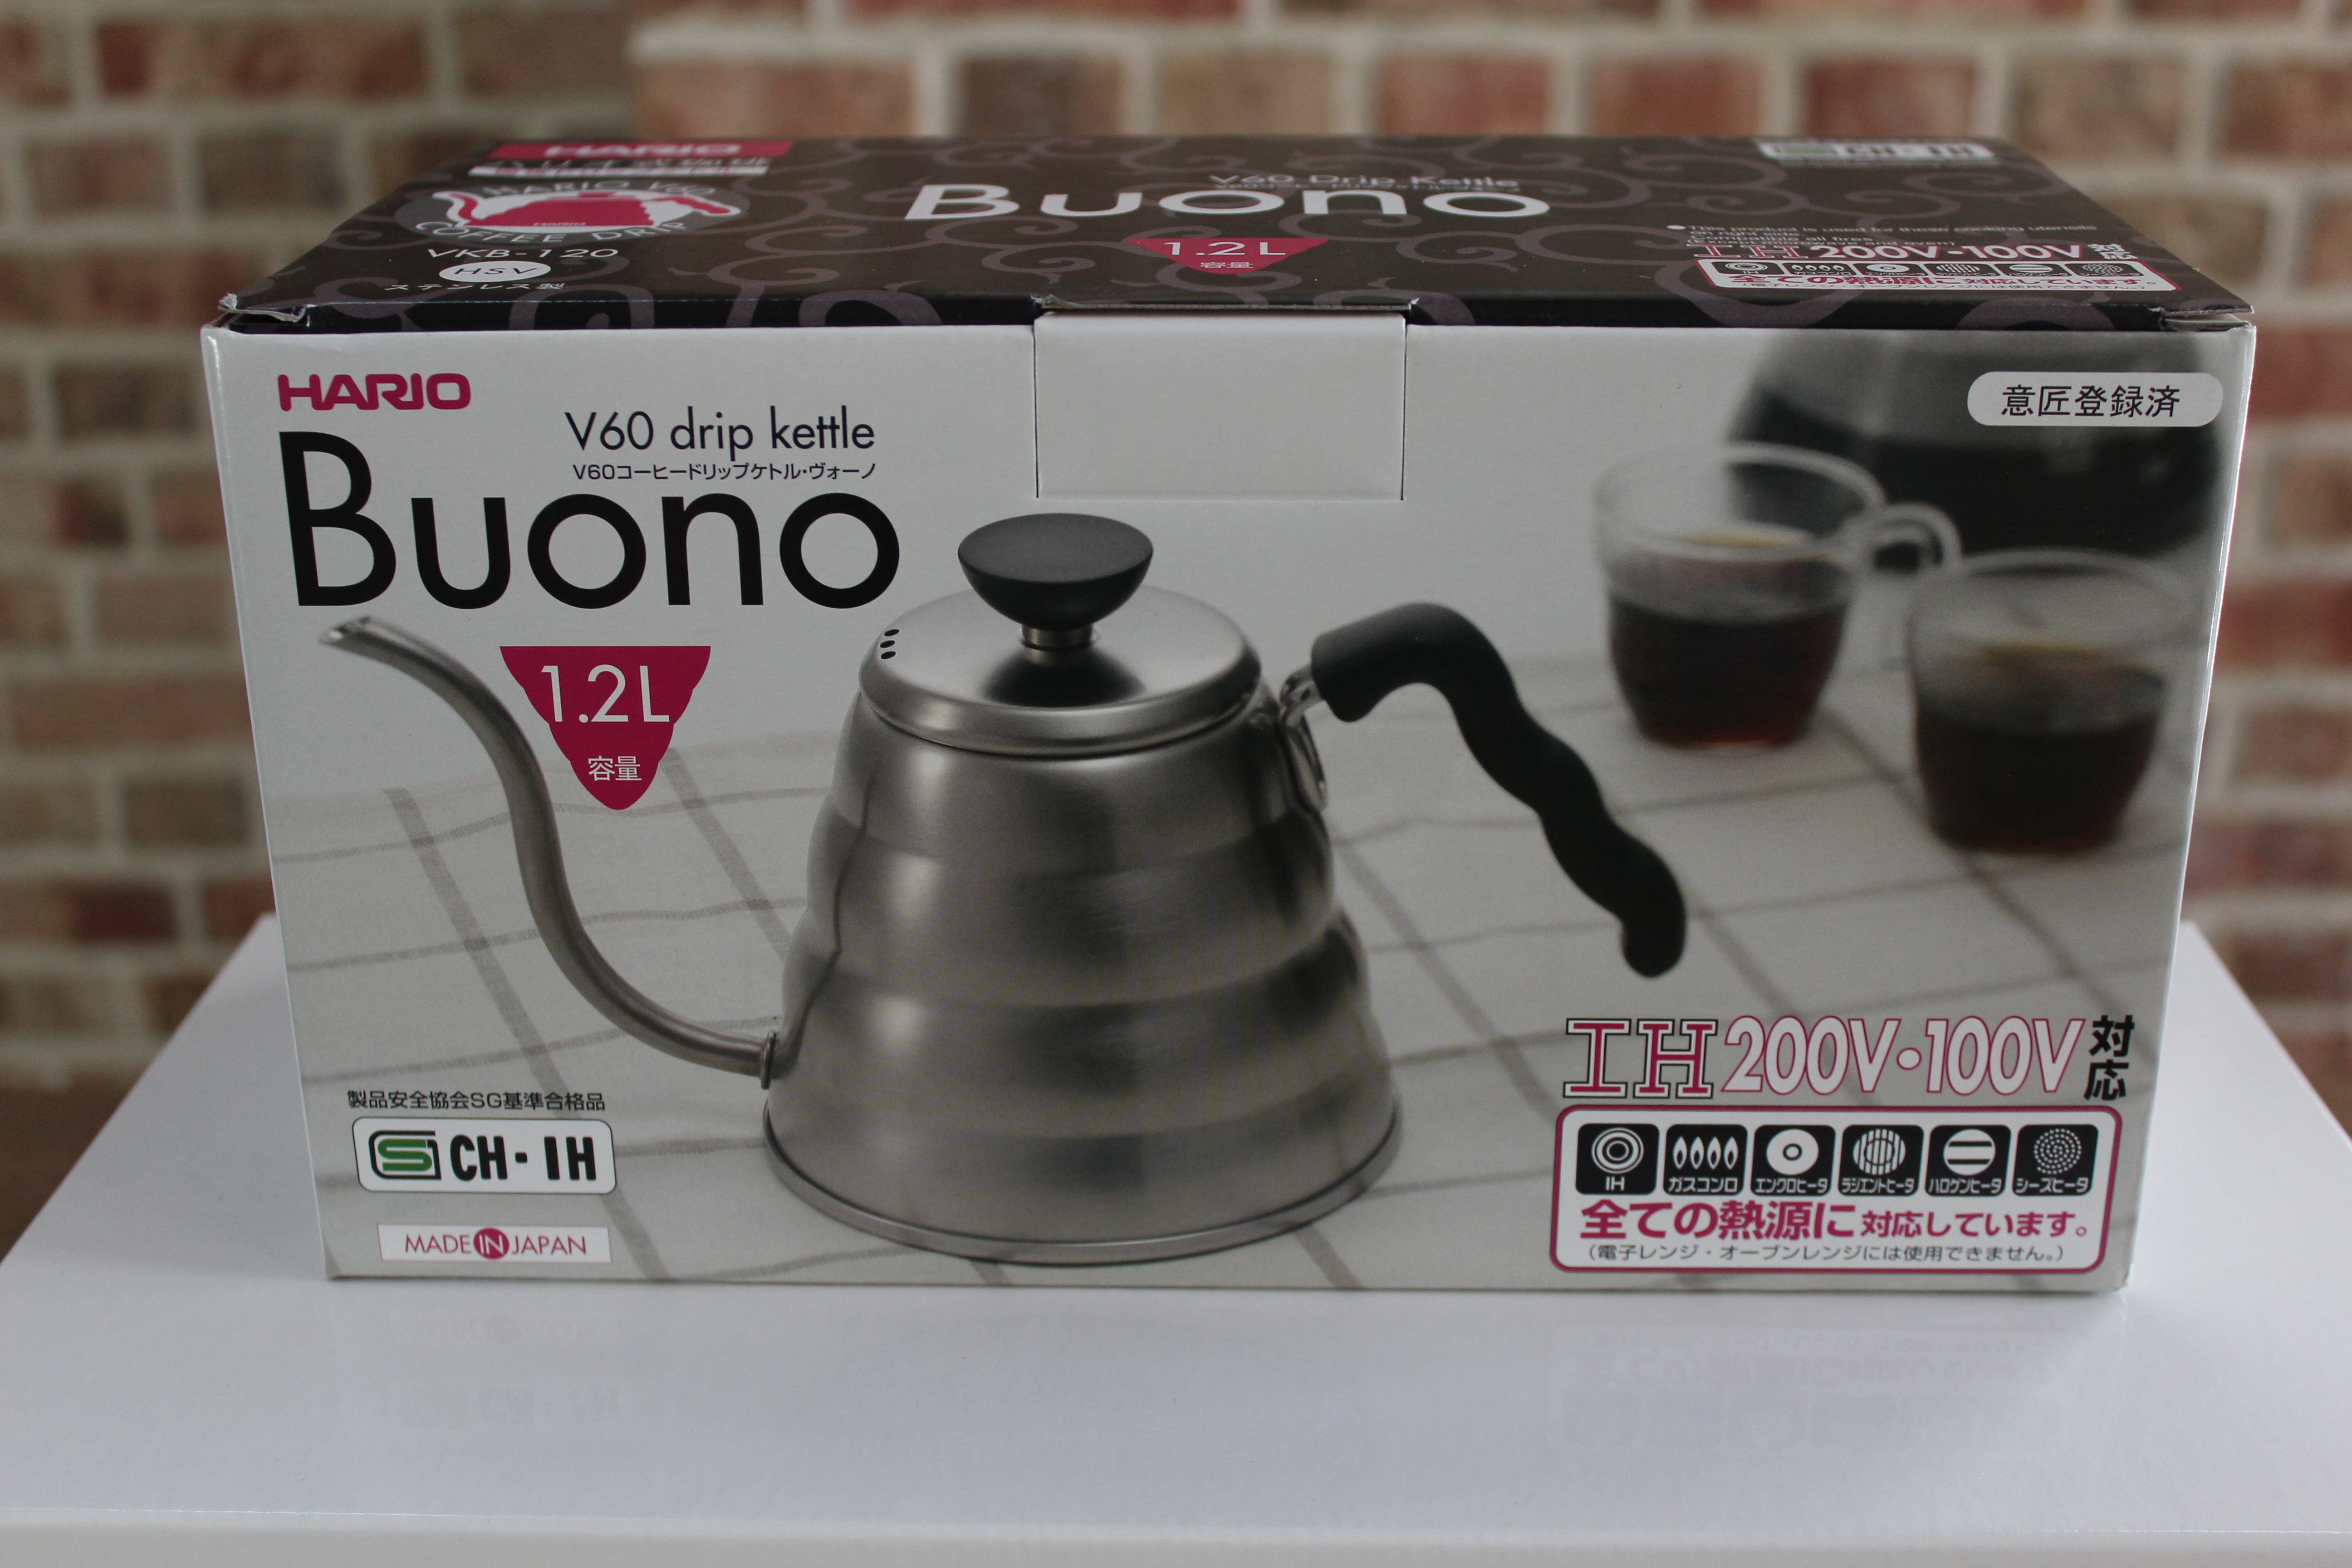 Coffee drip kettle Buono von Hario